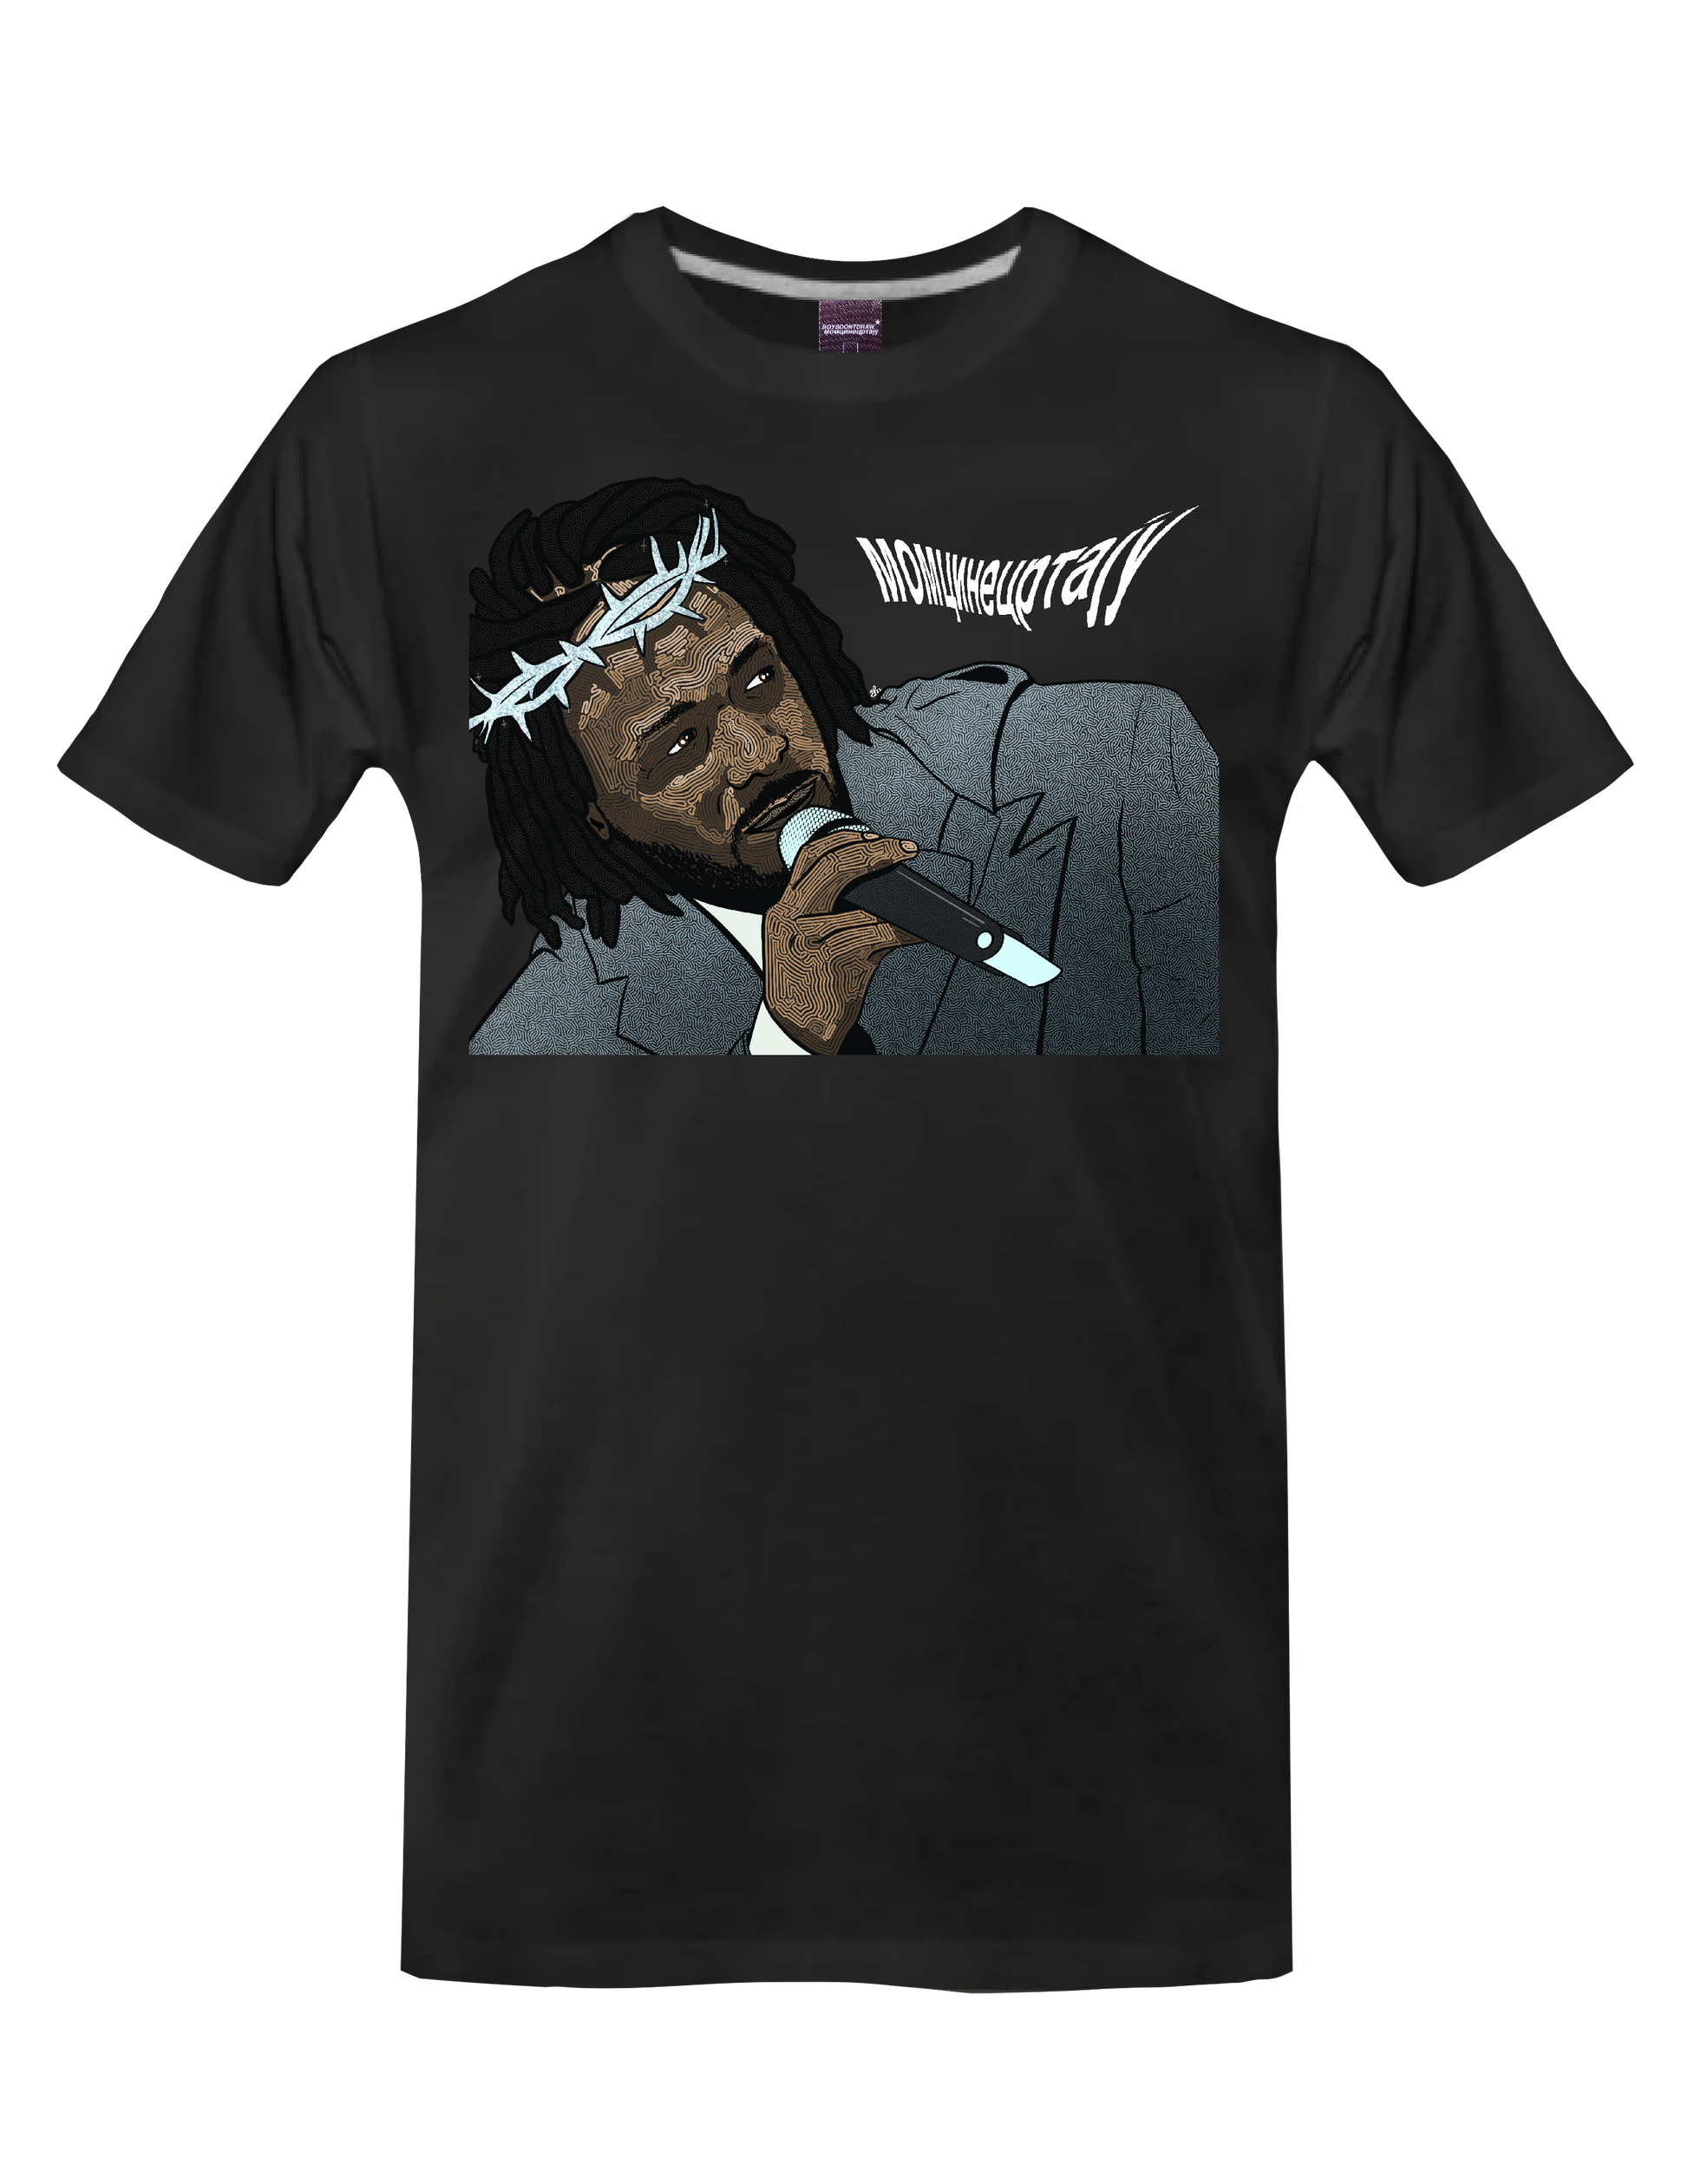 KENDRICK LAMAR - MR. MORALE* (Black) - T-Shirt by BOYSDONTDRAW